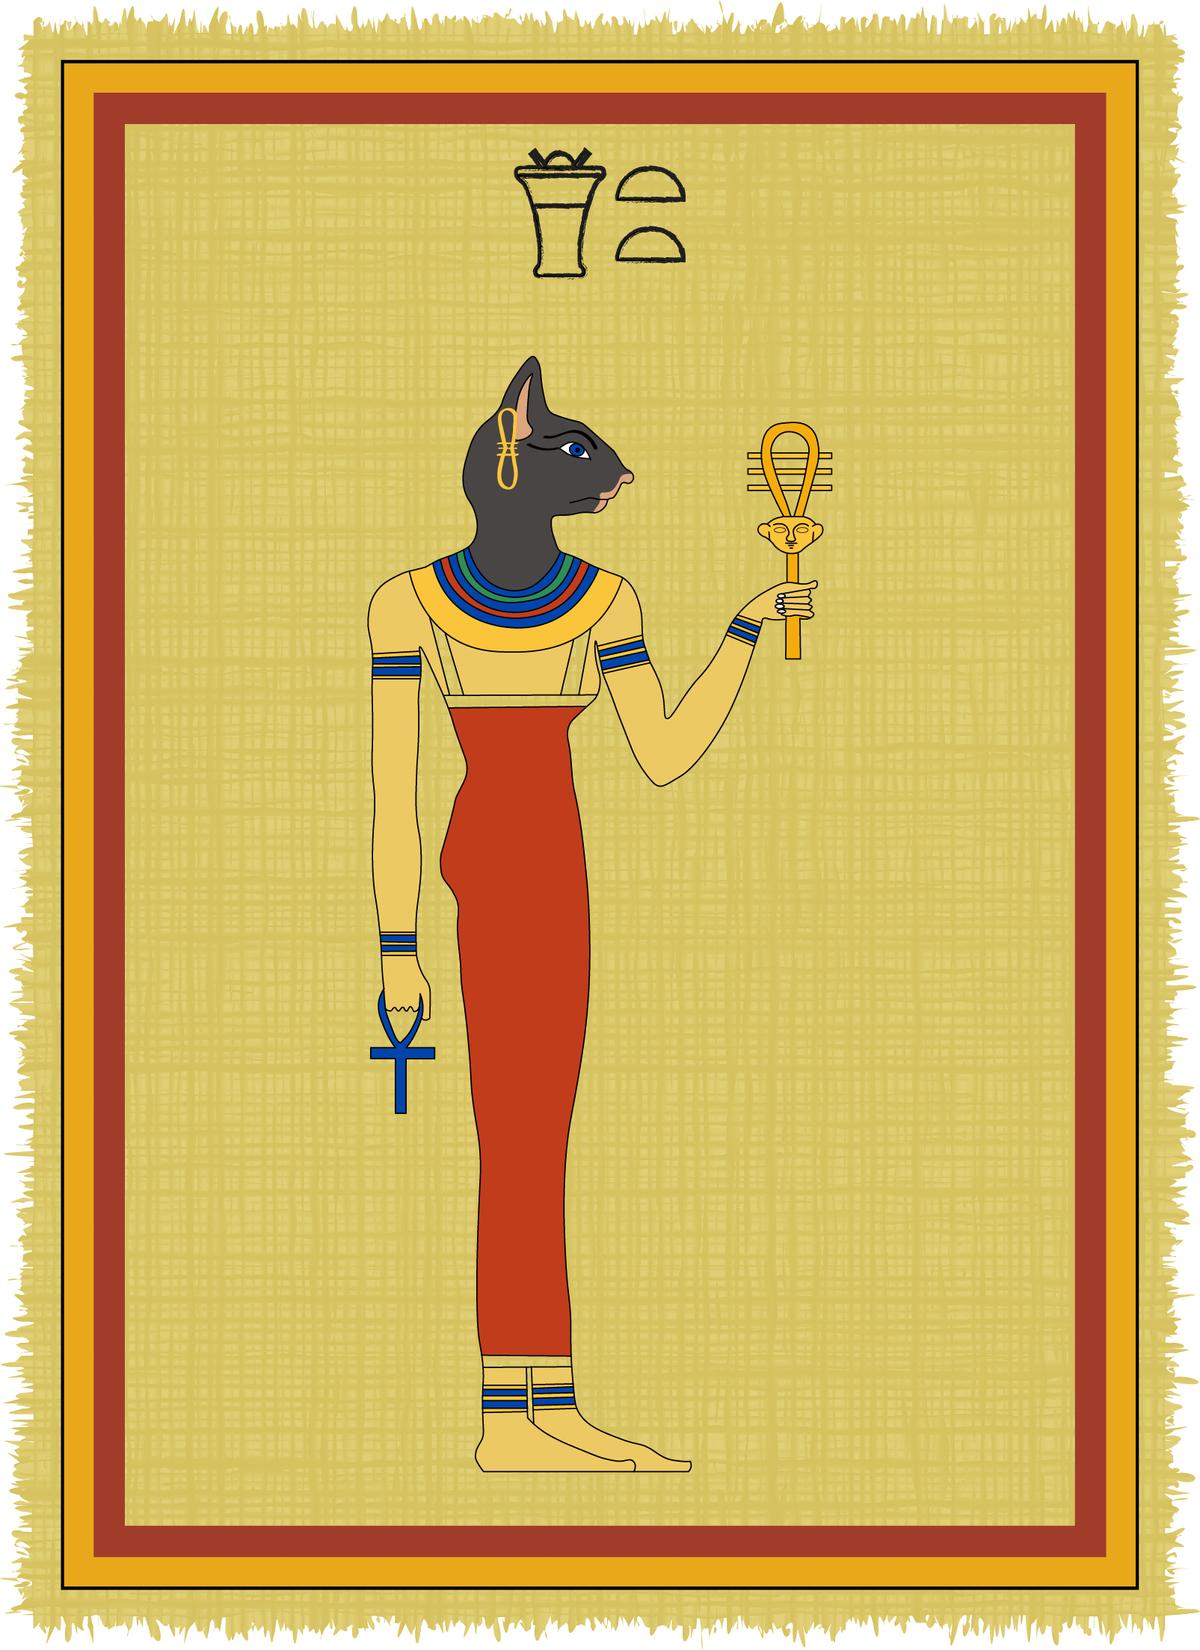 ©Shutterstock | <a href="https://www.shutterstock.com/image-vector/papyrus-image-bastet-ancient-egyptian-goddess-790192402?src=gn8JBj8rP3D3Ul8T_61QZA-1-0&studio=1">AndreyO</a>